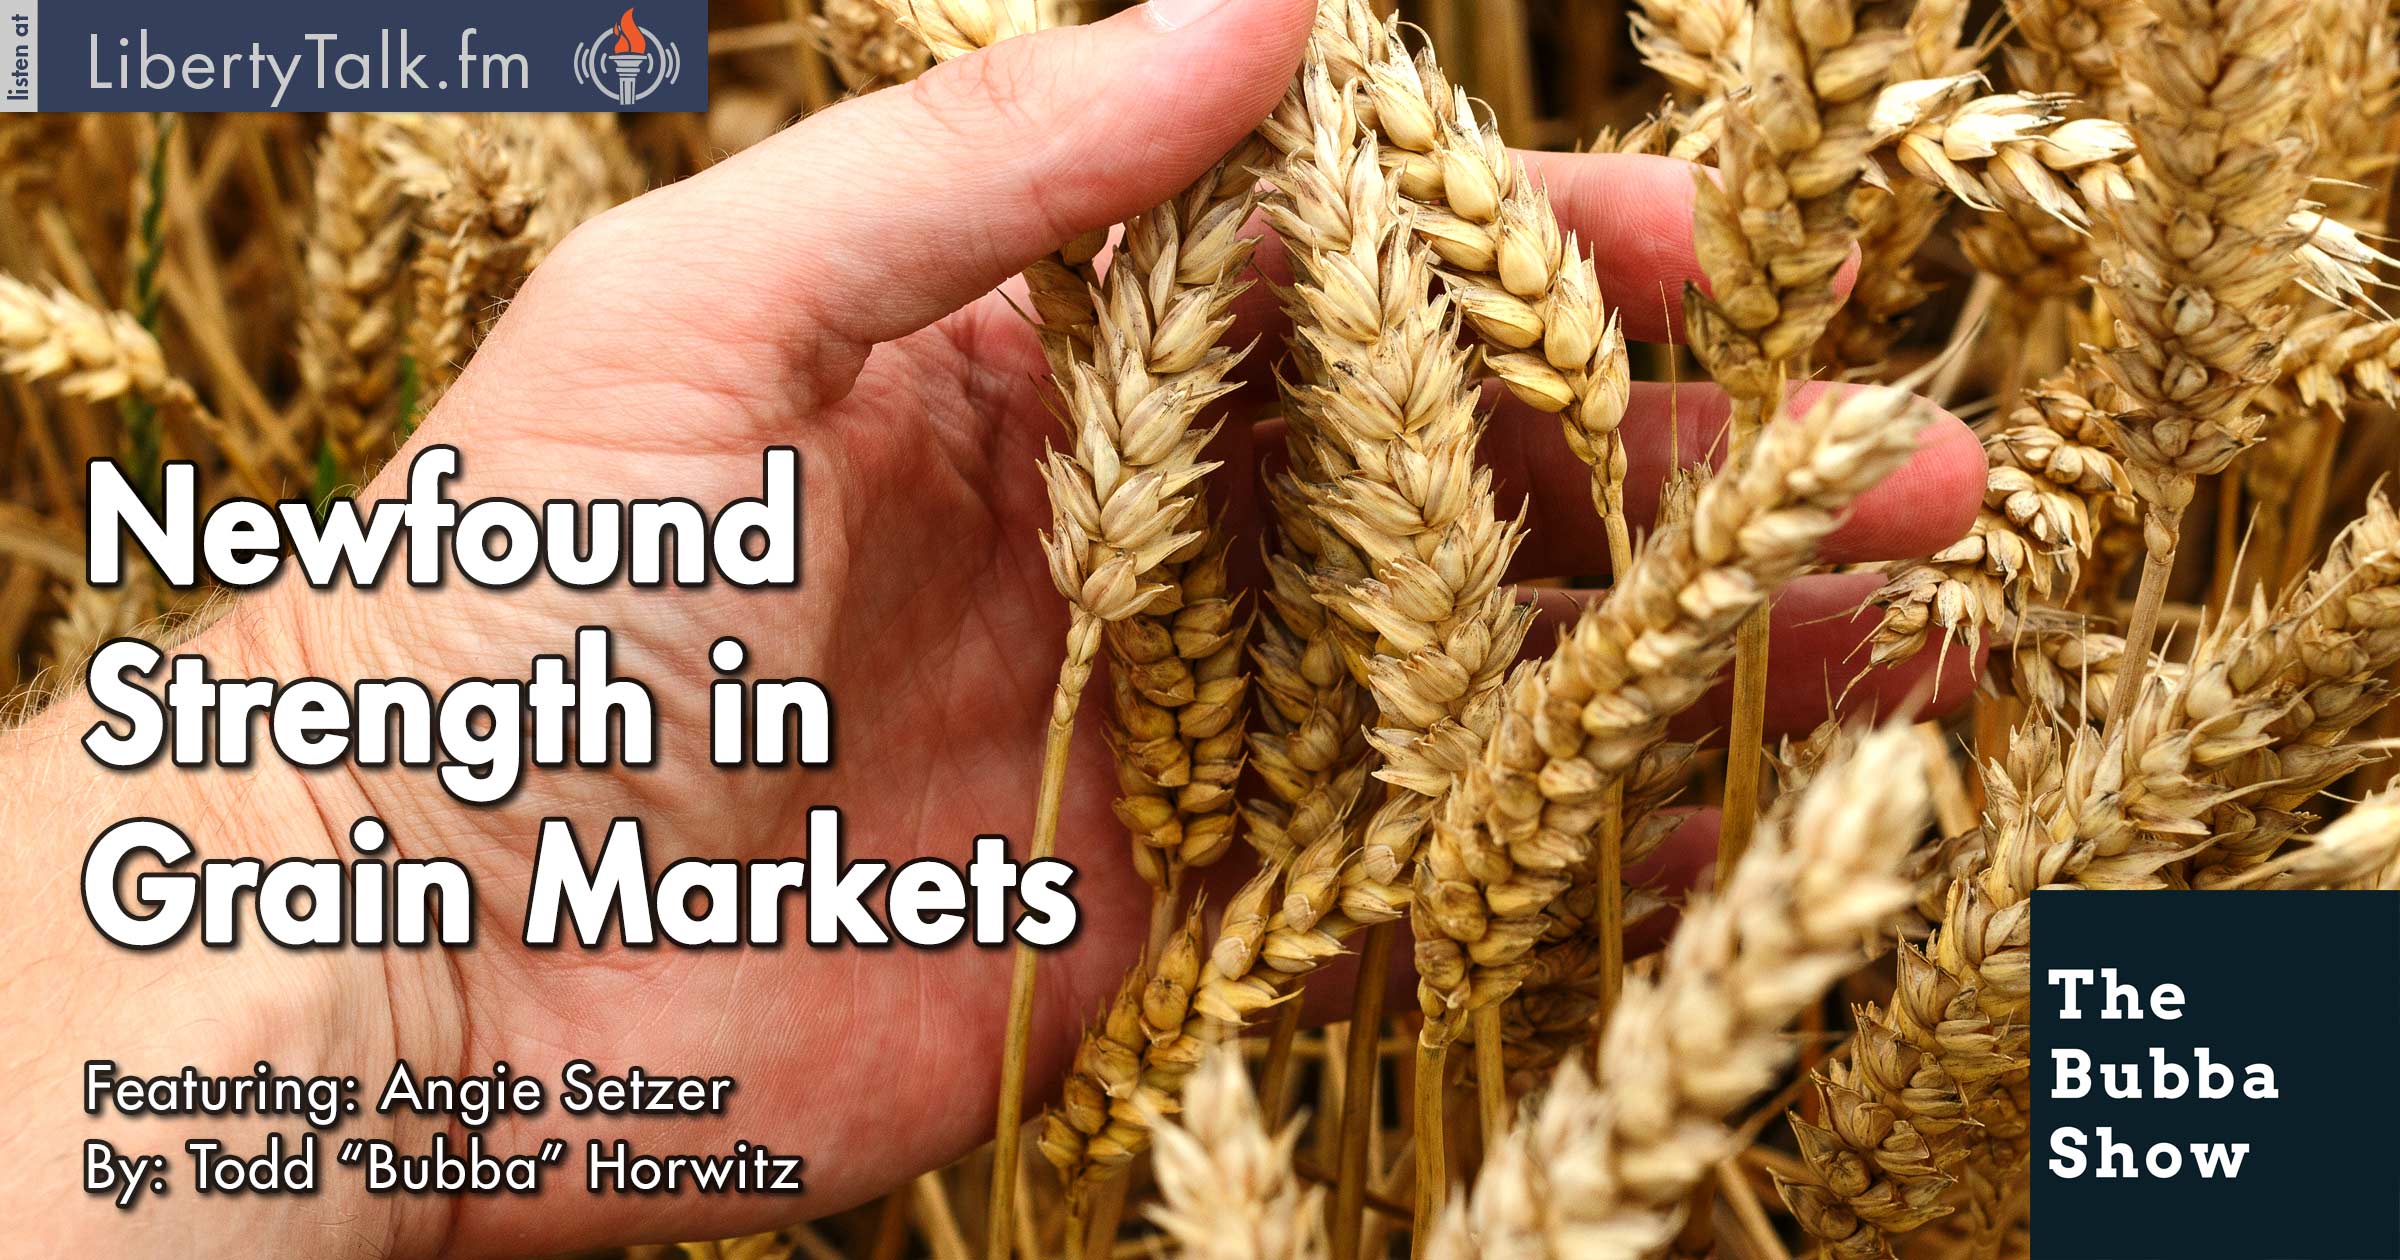 Newfound Strength in Grain Markets - The Bubba Show